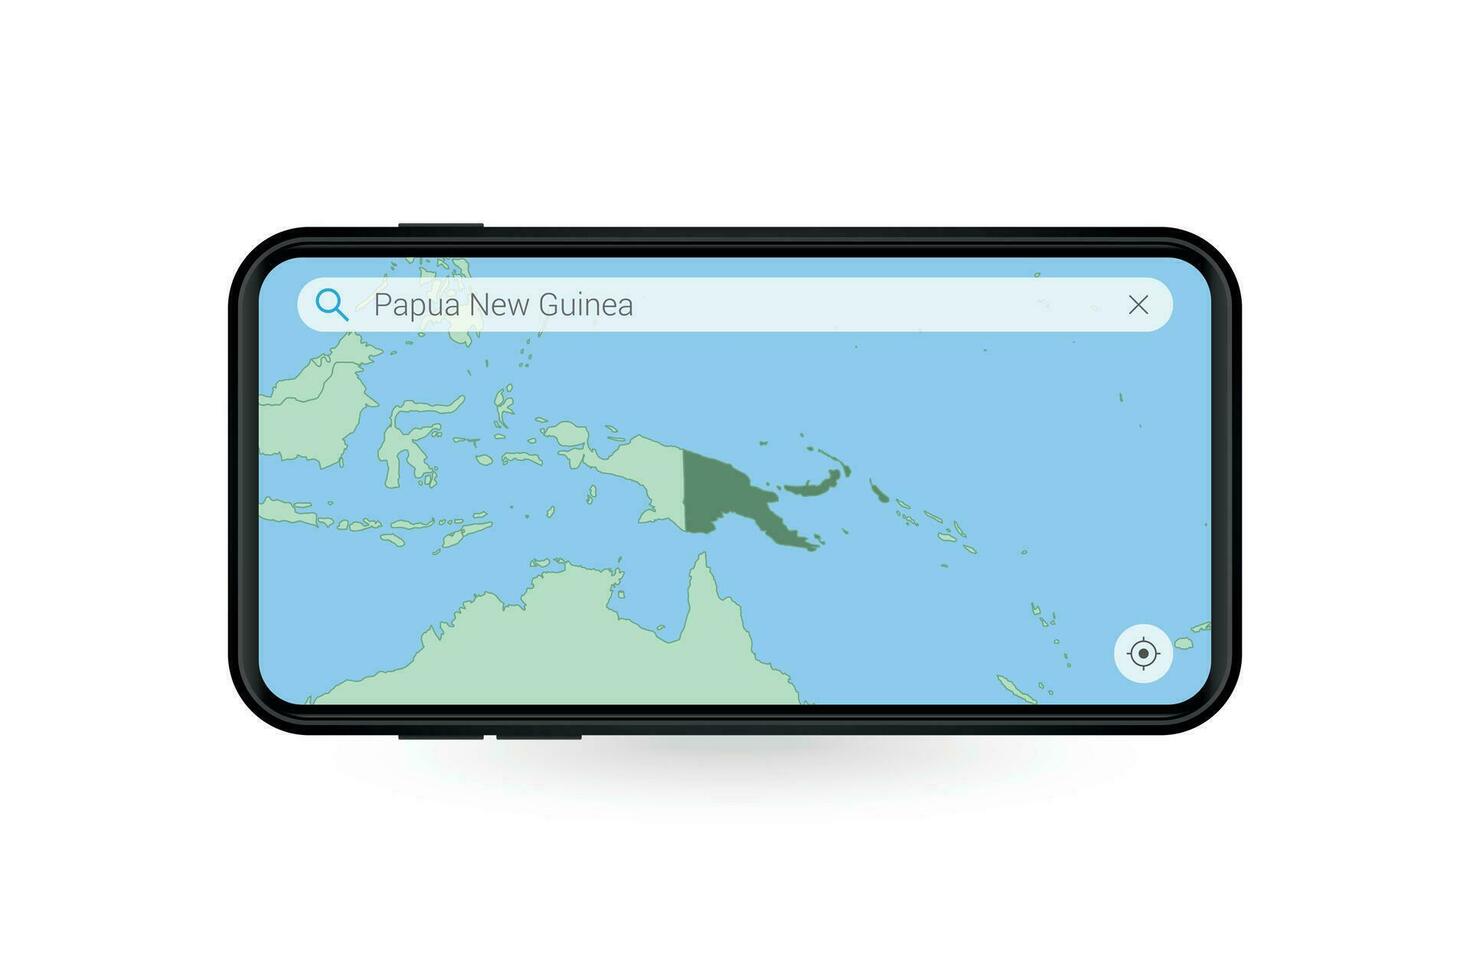 buscando mapa de Papuasia nuevo Guinea en teléfono inteligente mapa solicitud. mapa de Papuasia nuevo Guinea en célula teléfono. vector